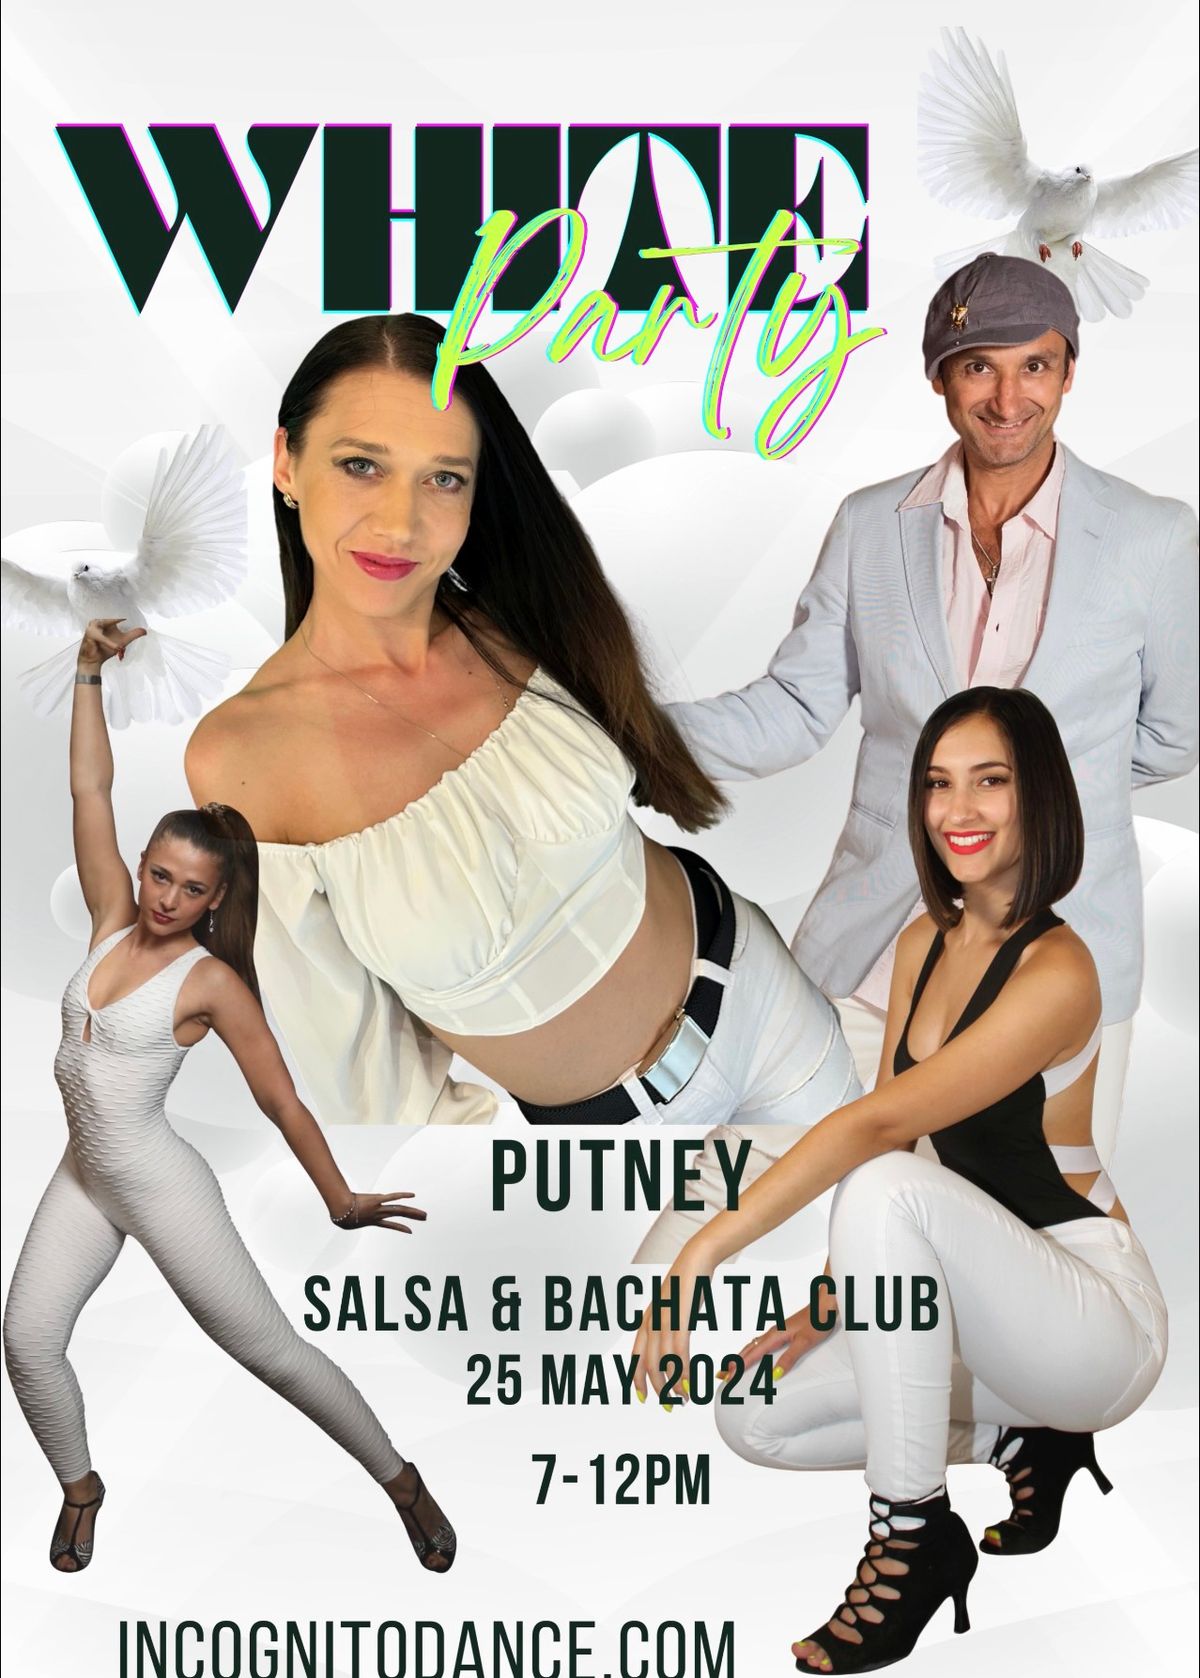 WHITE PARTY - Putney Salsa & Bachata Club